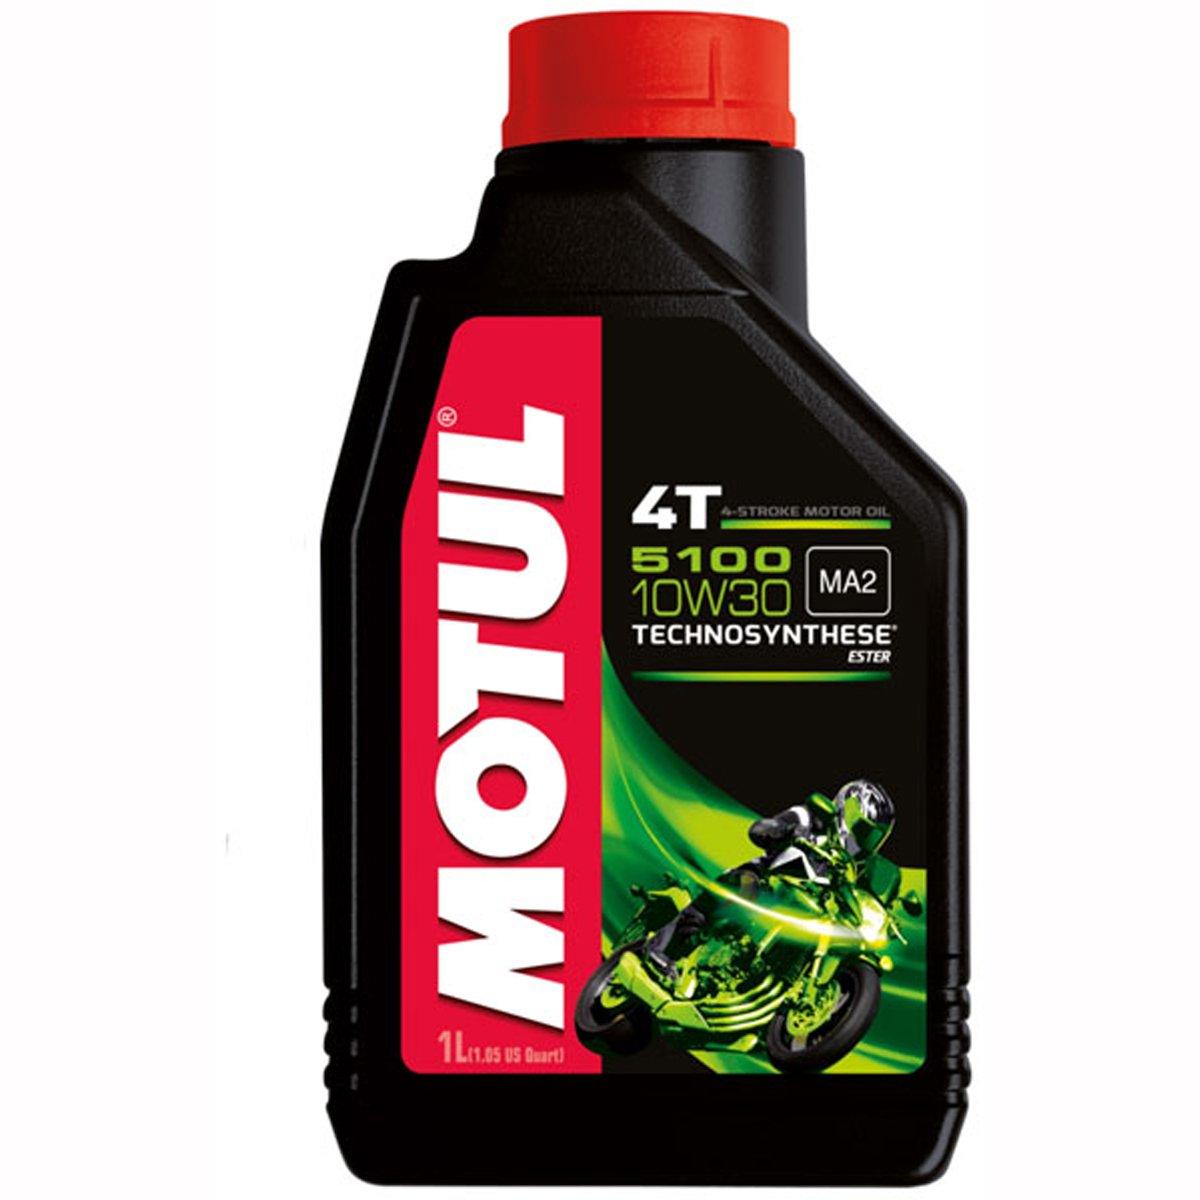 Motul Semi-Synthetic 5100 10W30 4T Oil Black 4L